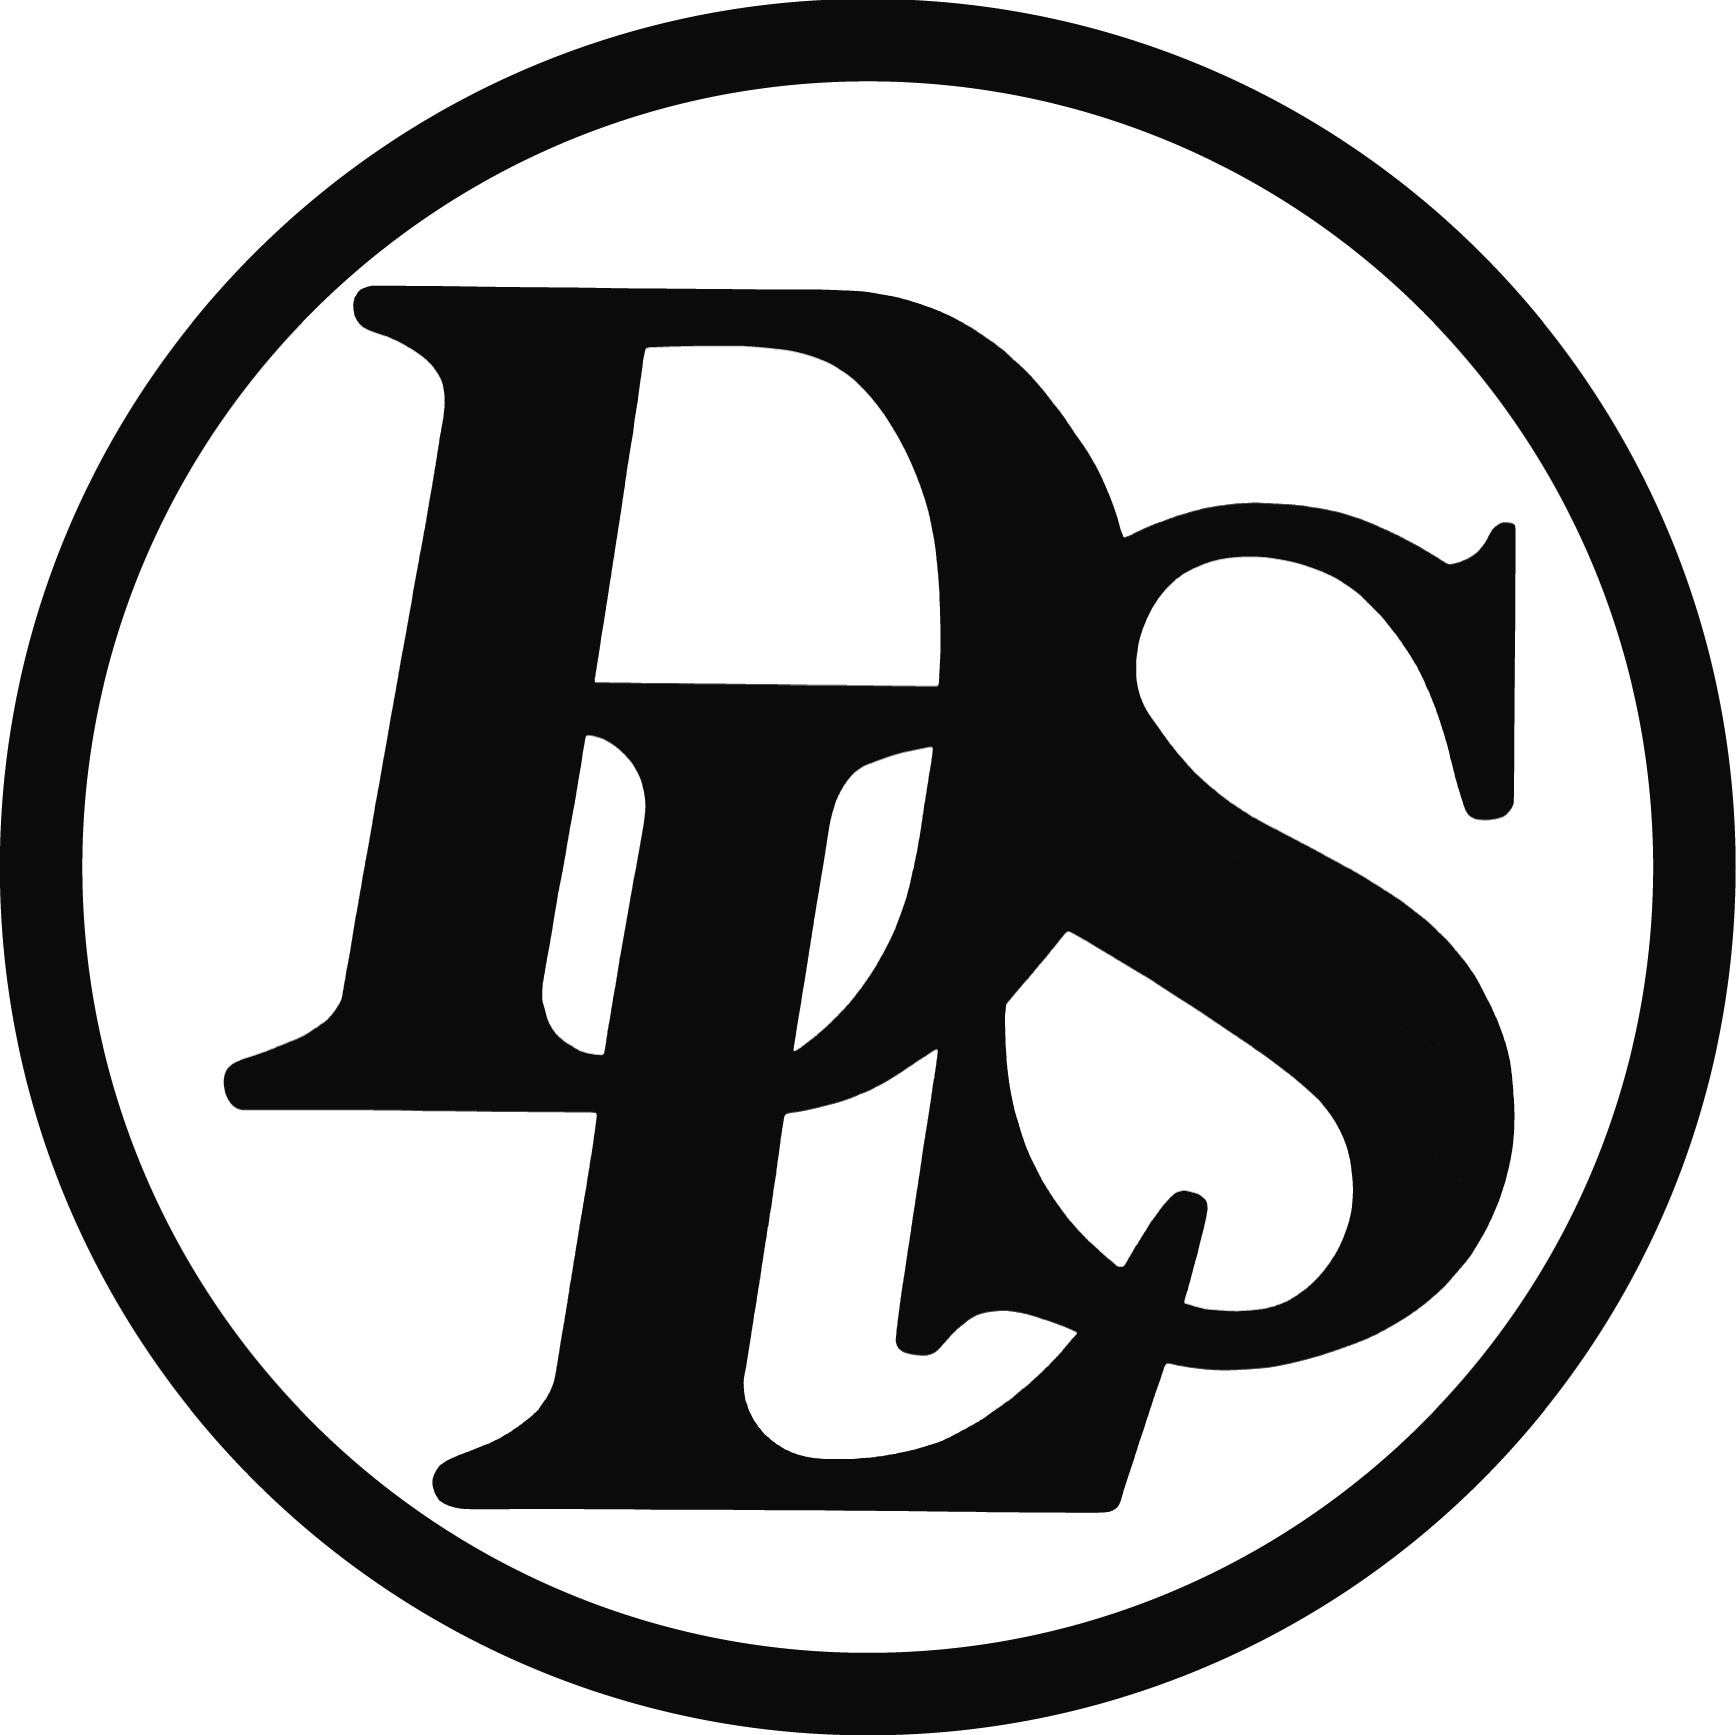 DLS Logo Wallpaper